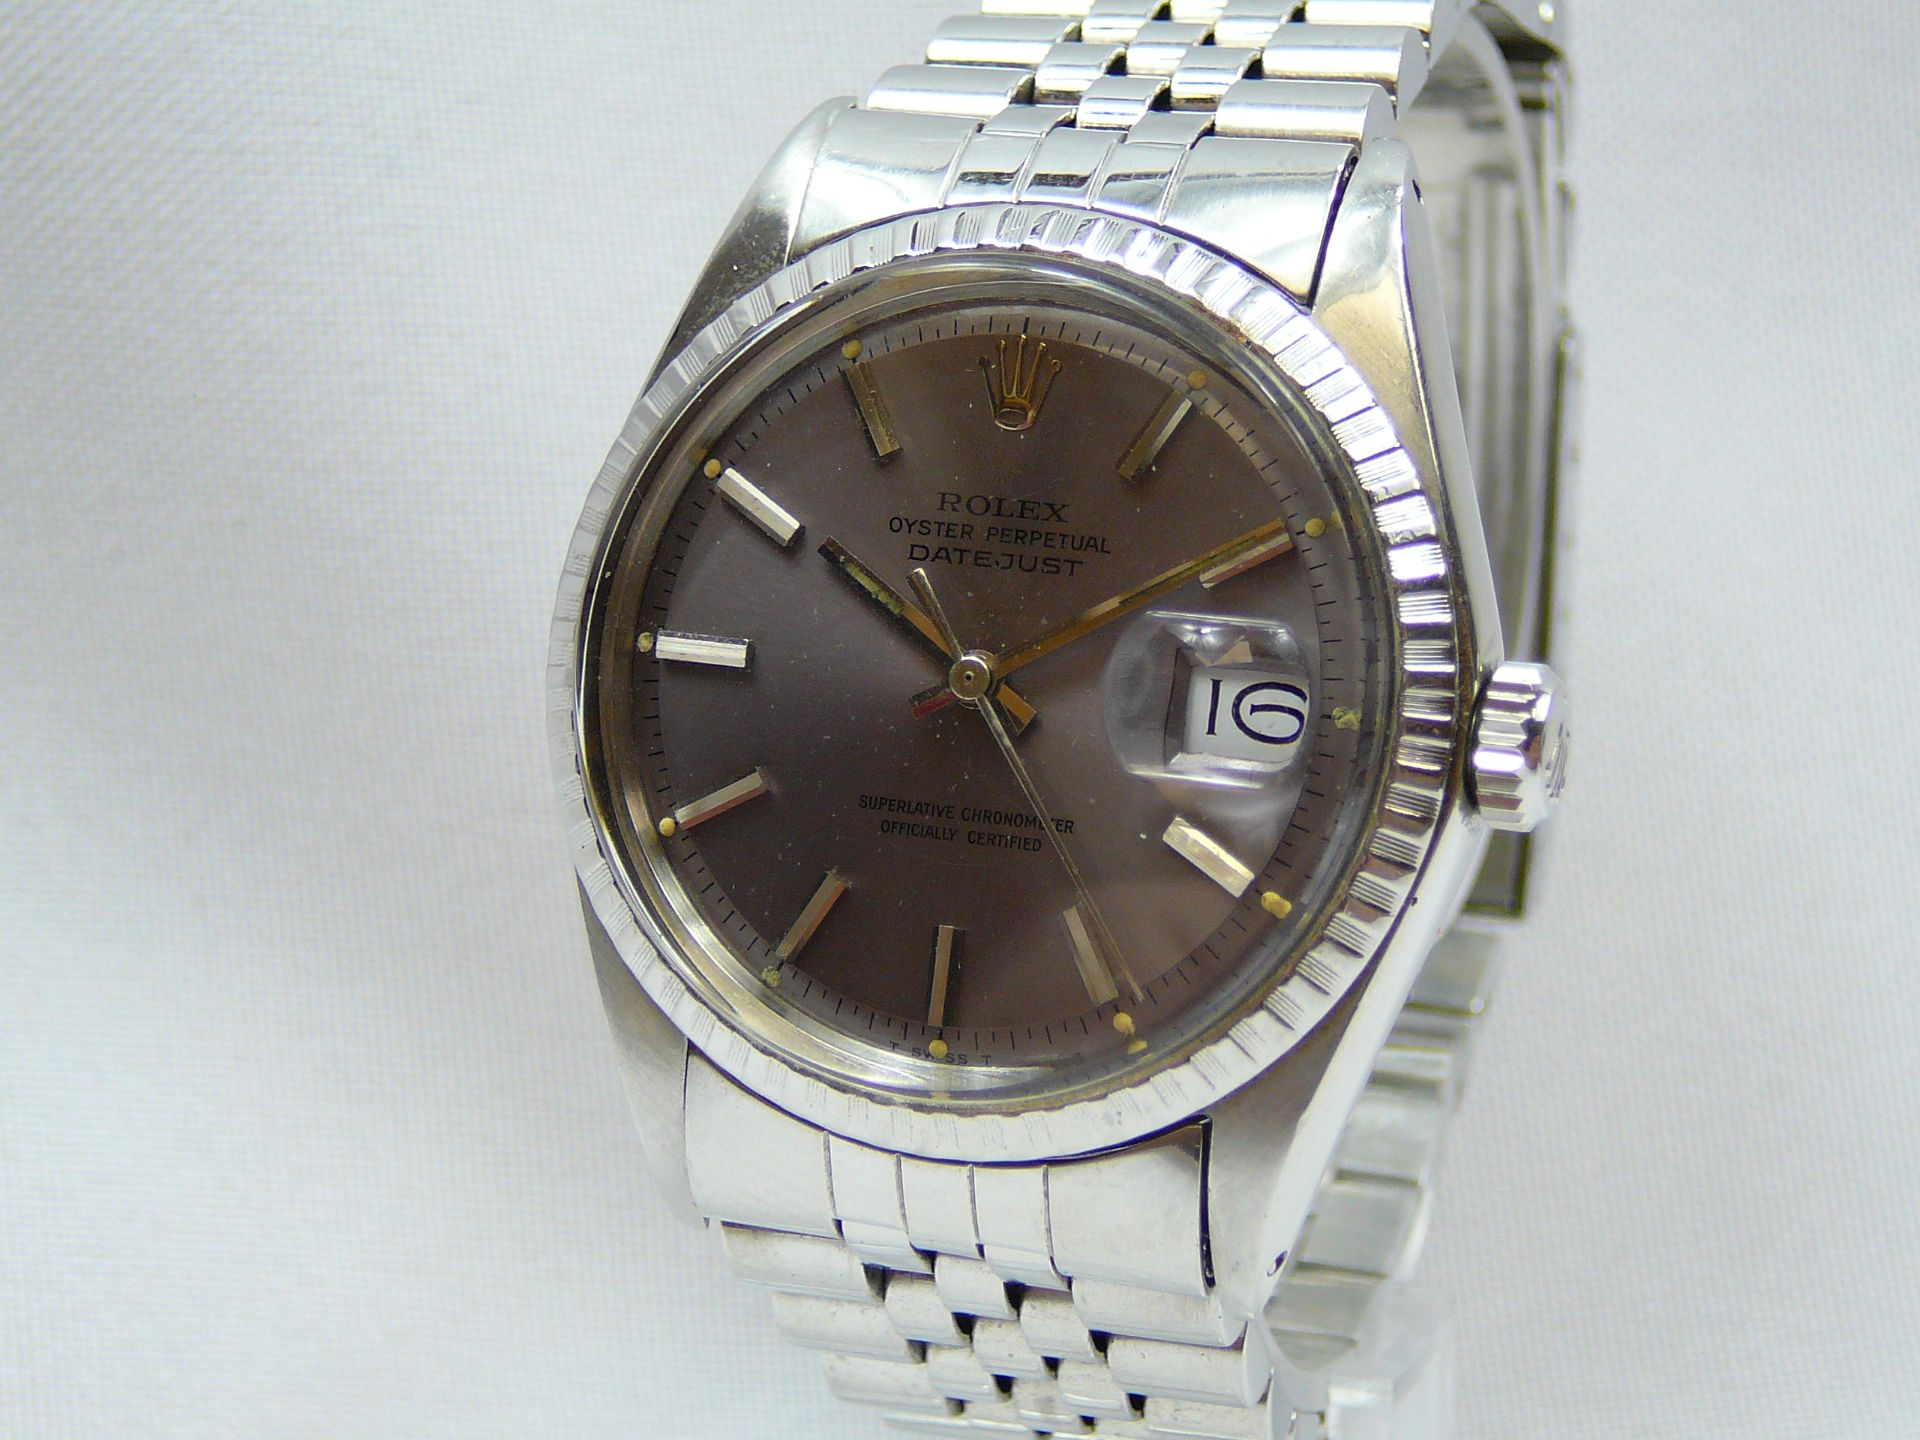 Gents Rolex Wristwatch - Image 2 of 6